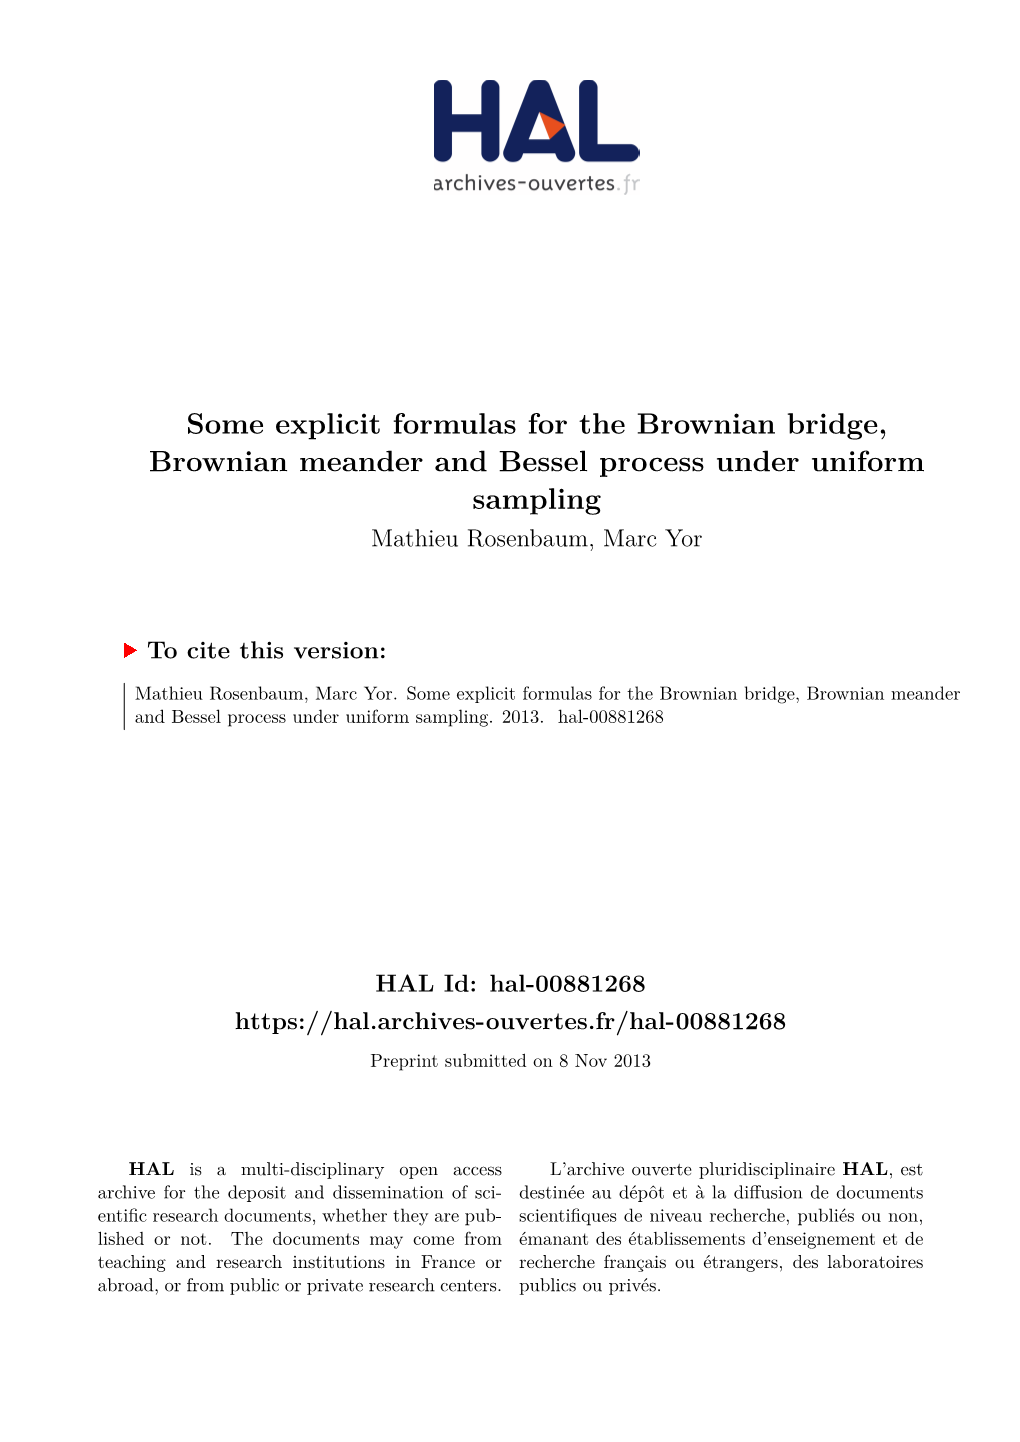 Some Explicit Formulas for the Brownian Bridge, Brownian Meander and Bessel Process Under Uniform Sampling Mathieu Rosenbaum, Marc Yor